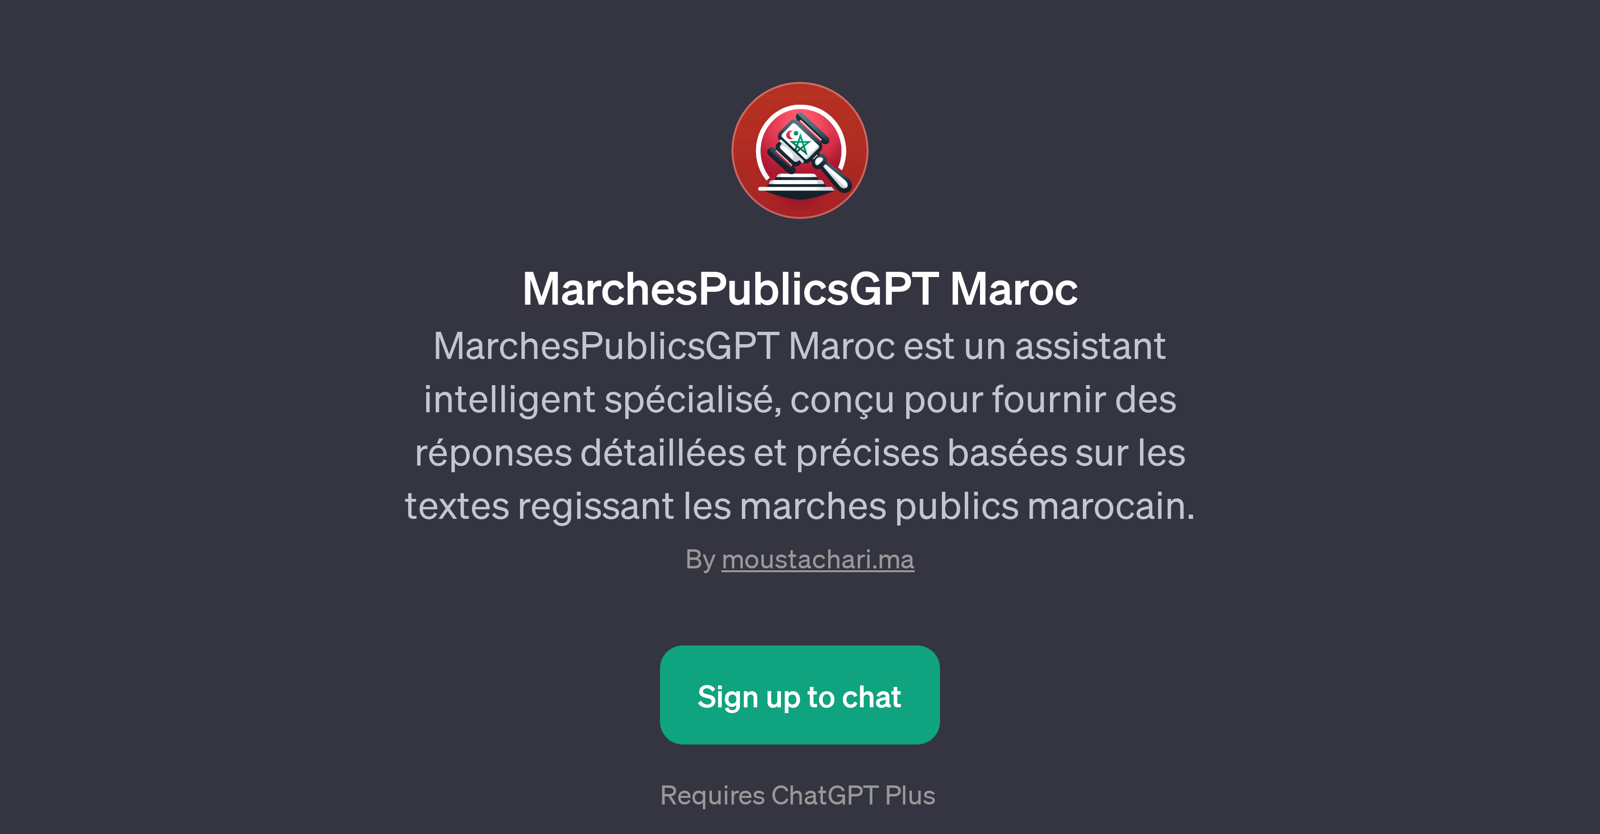 MarchesPublicsGPT Maroc website